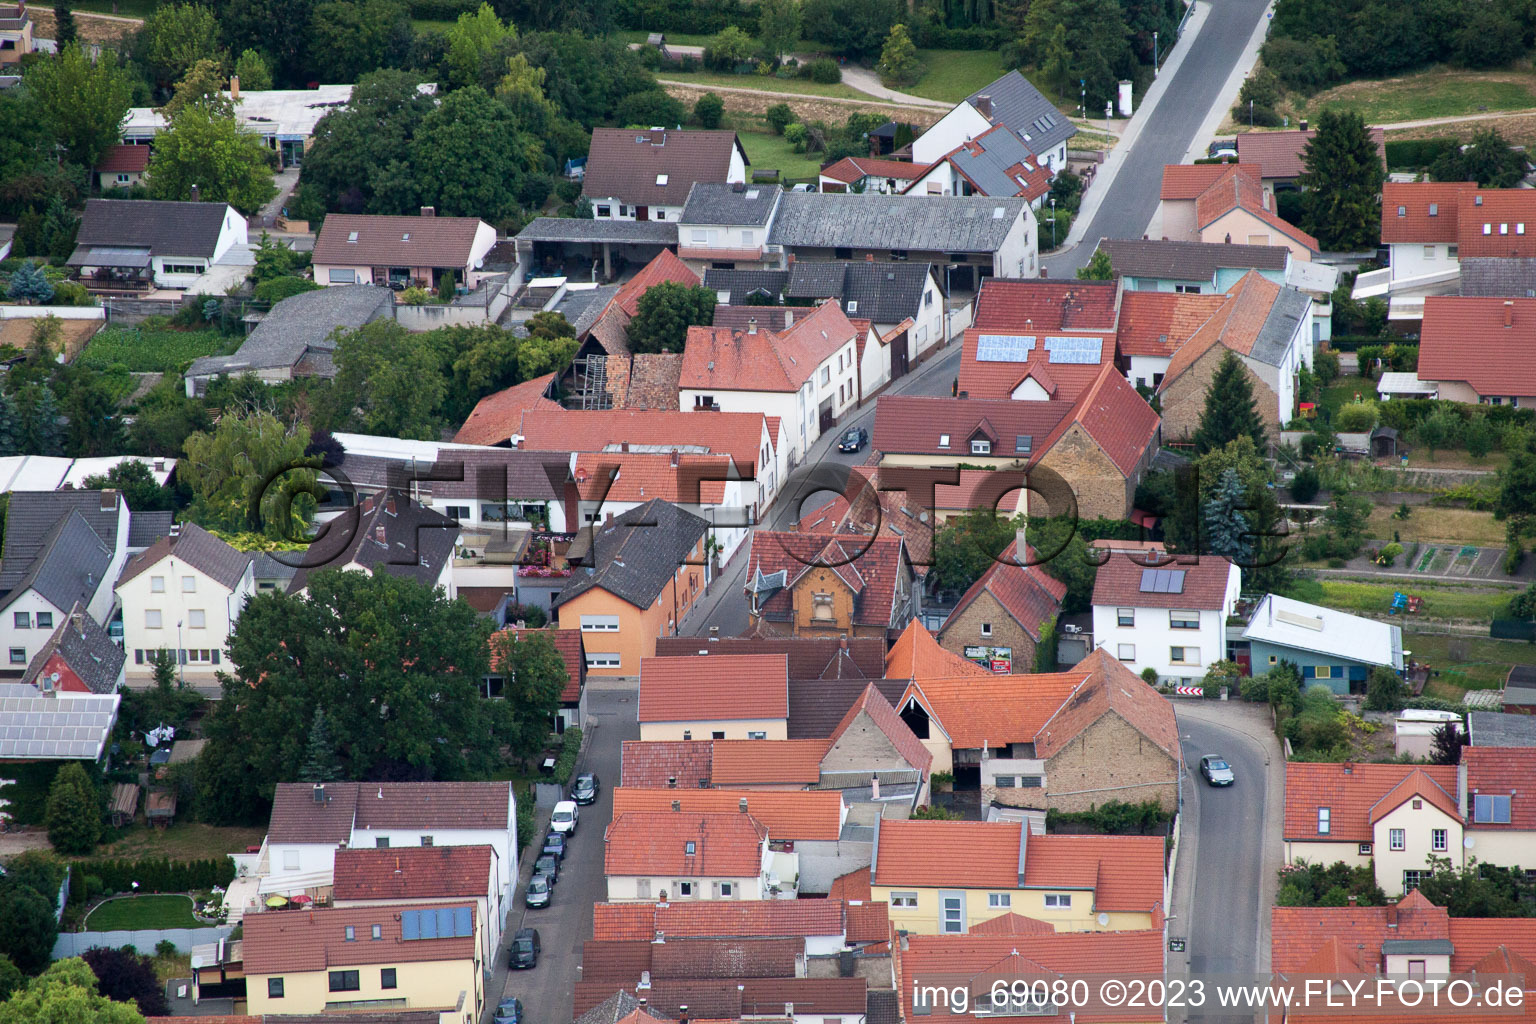 Dammstr in the district Bobenheim in Bobenheim-Roxheim in the state Rhineland-Palatinate, Germany